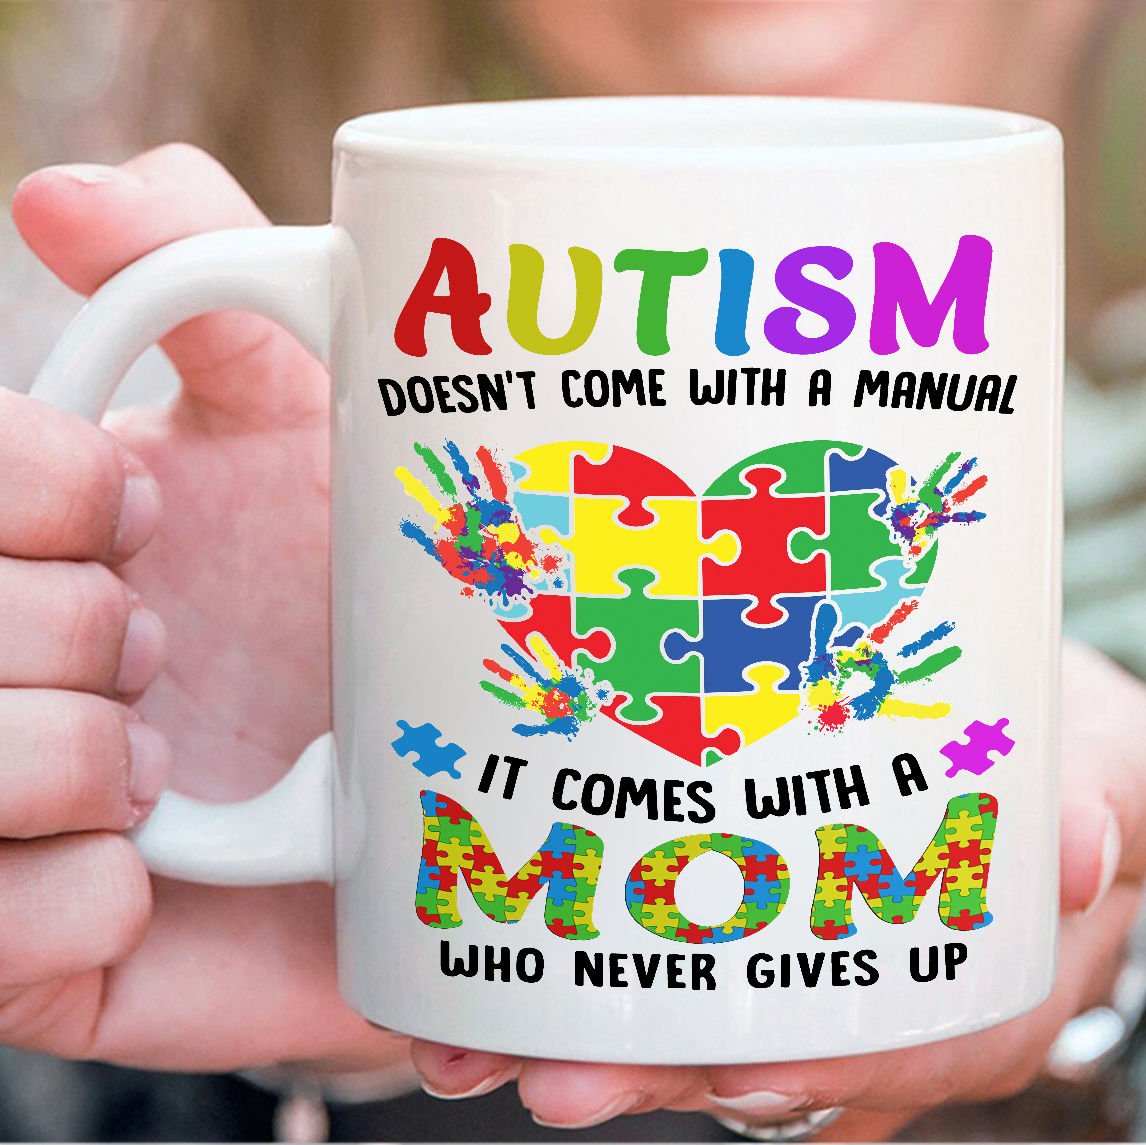 Autism Mama Bear And Cub Ceramic Coffee Mug - Autism Awareness Gift -  Berkley Rose Collection